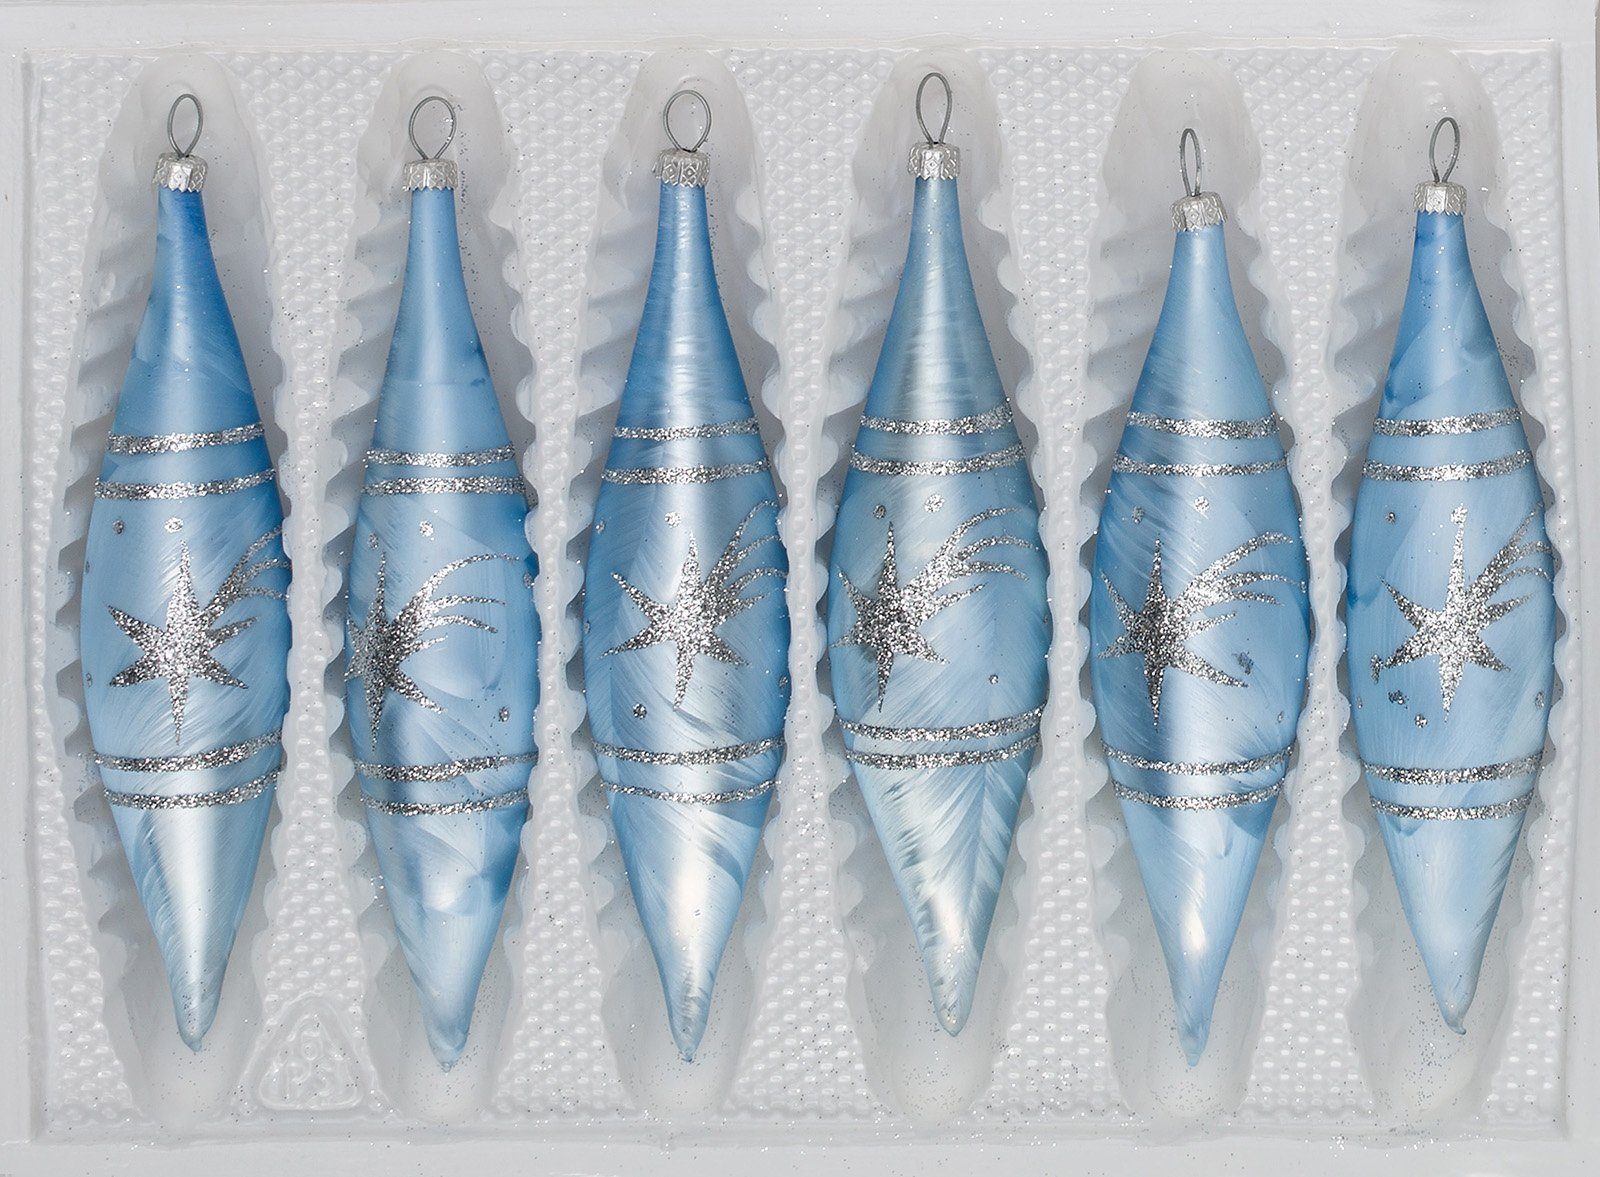 Navidacio Christbaumschmuck 6 tlg. Glas-Zapfen Set in Ice Blau Silber Komet